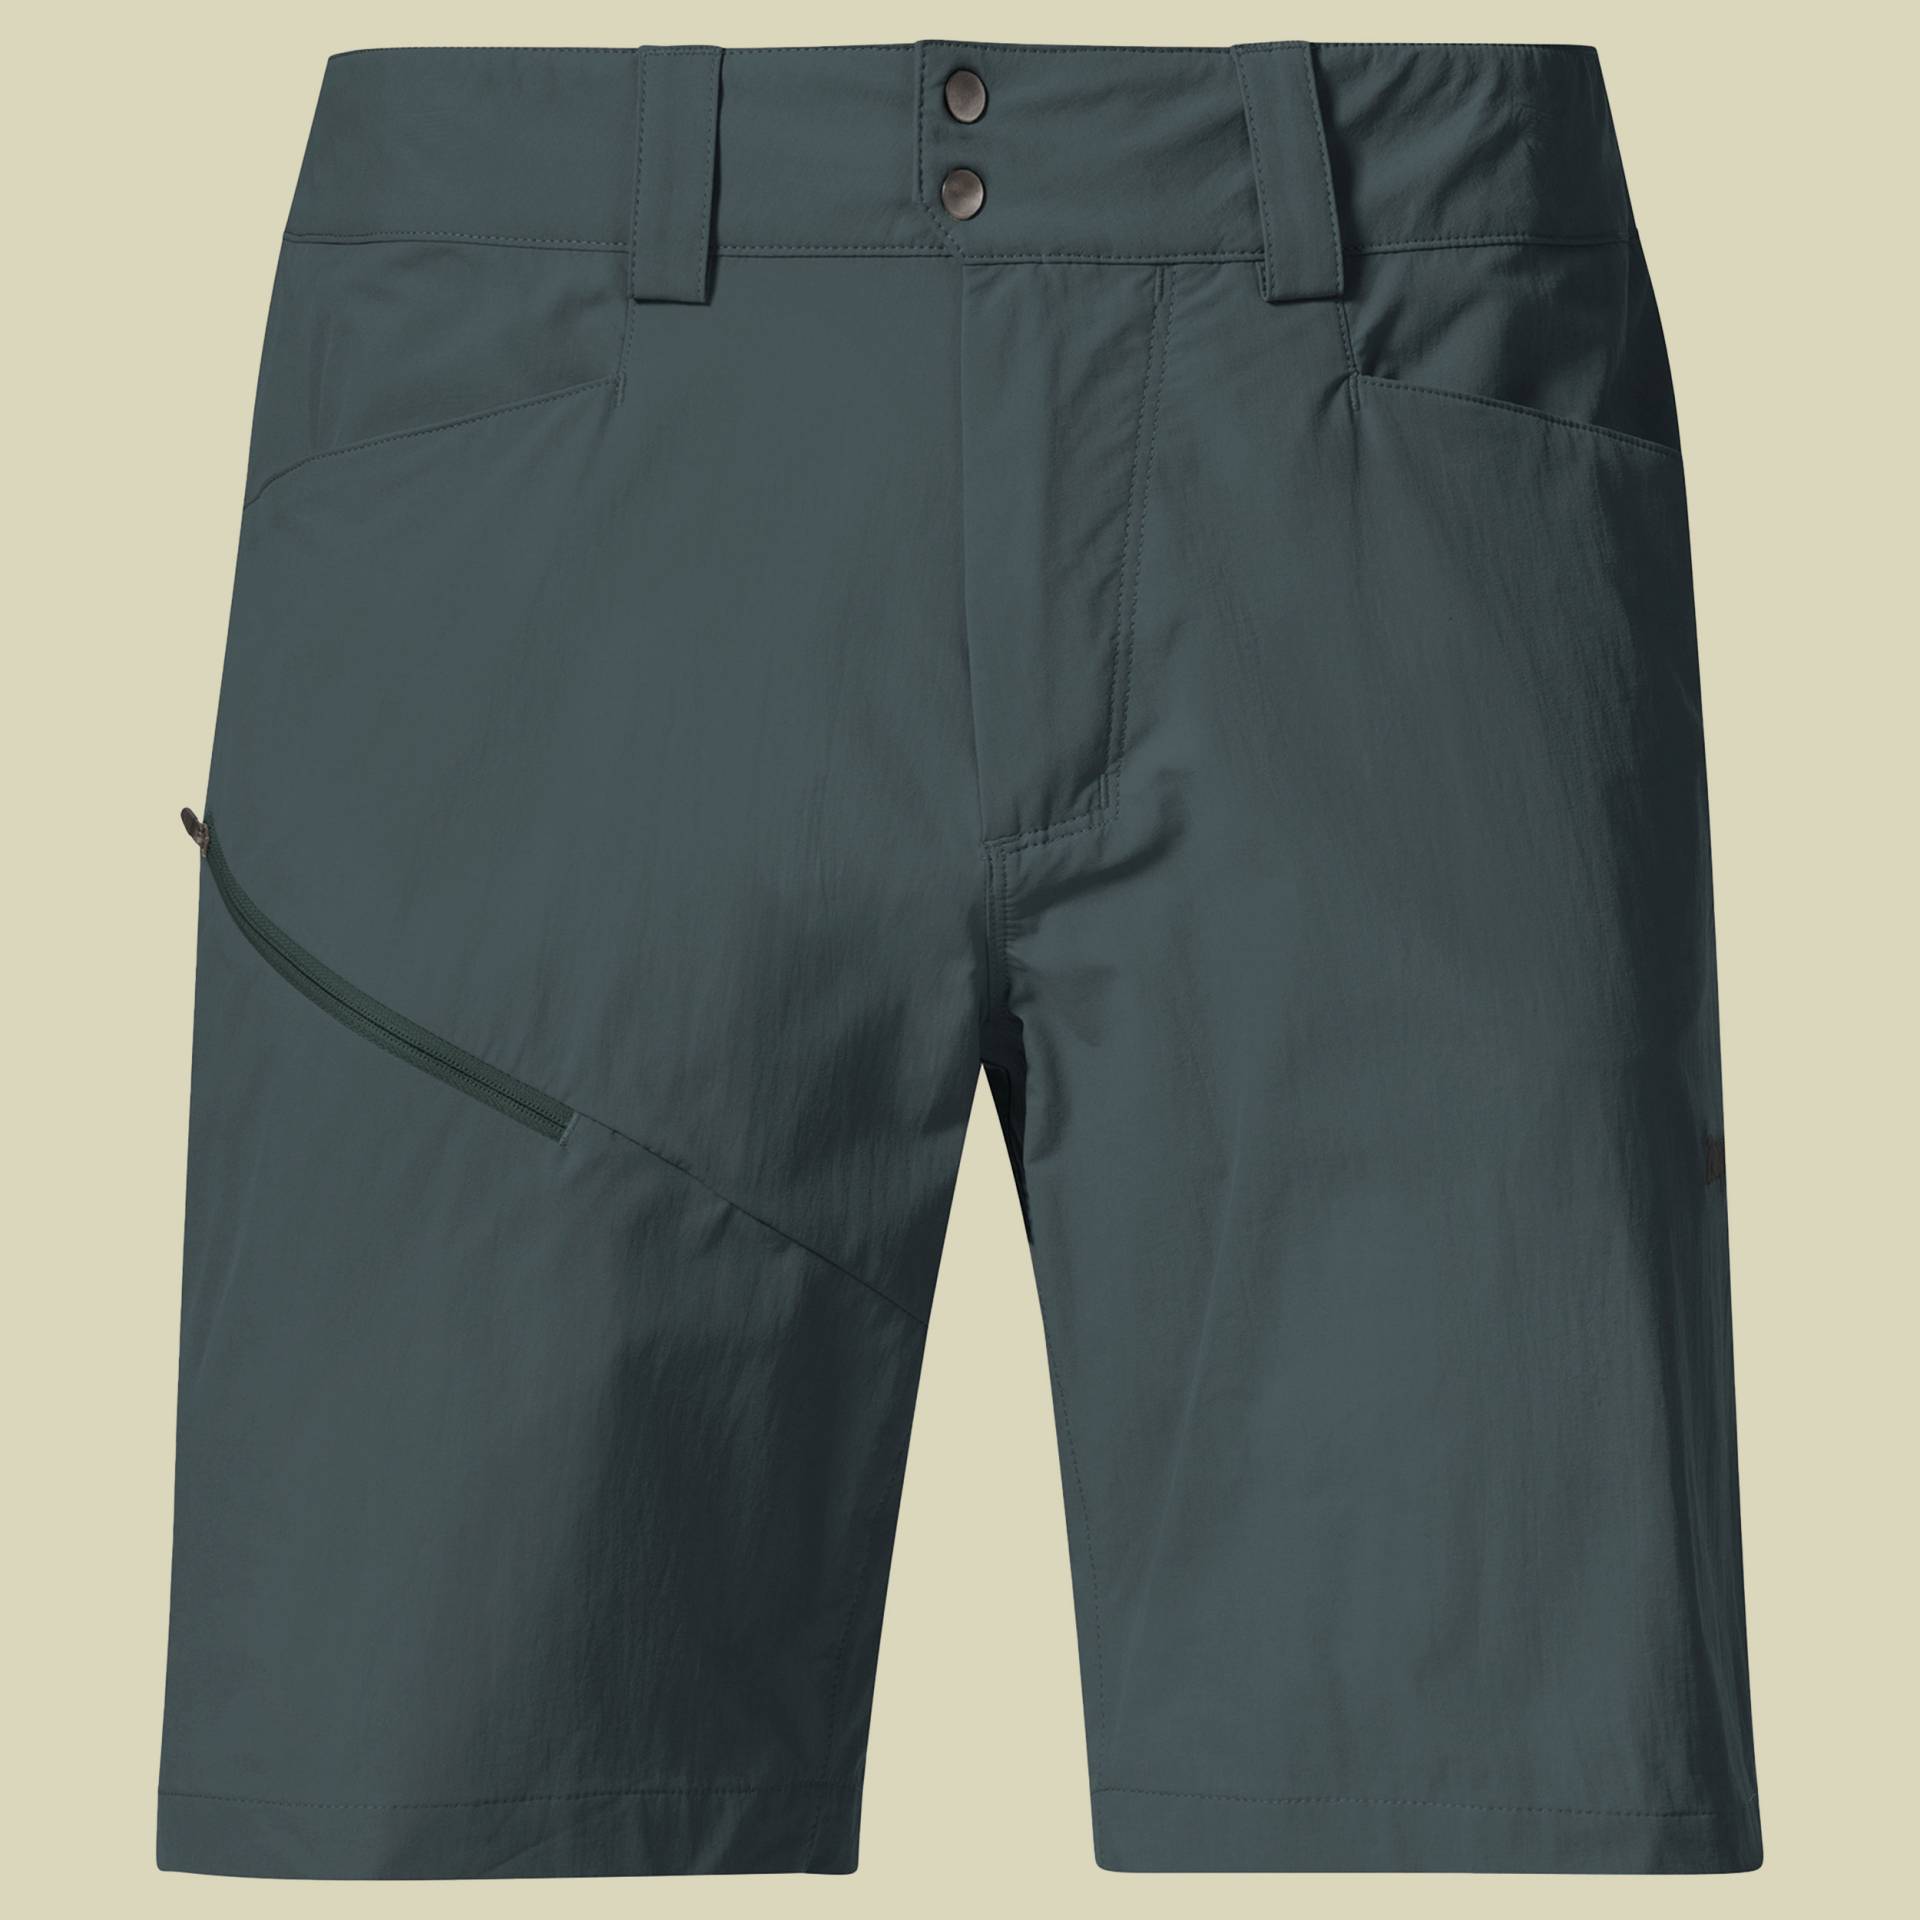 Rabot Light Softshell Shorts Men Größe 48 Farbe duke green von bergans